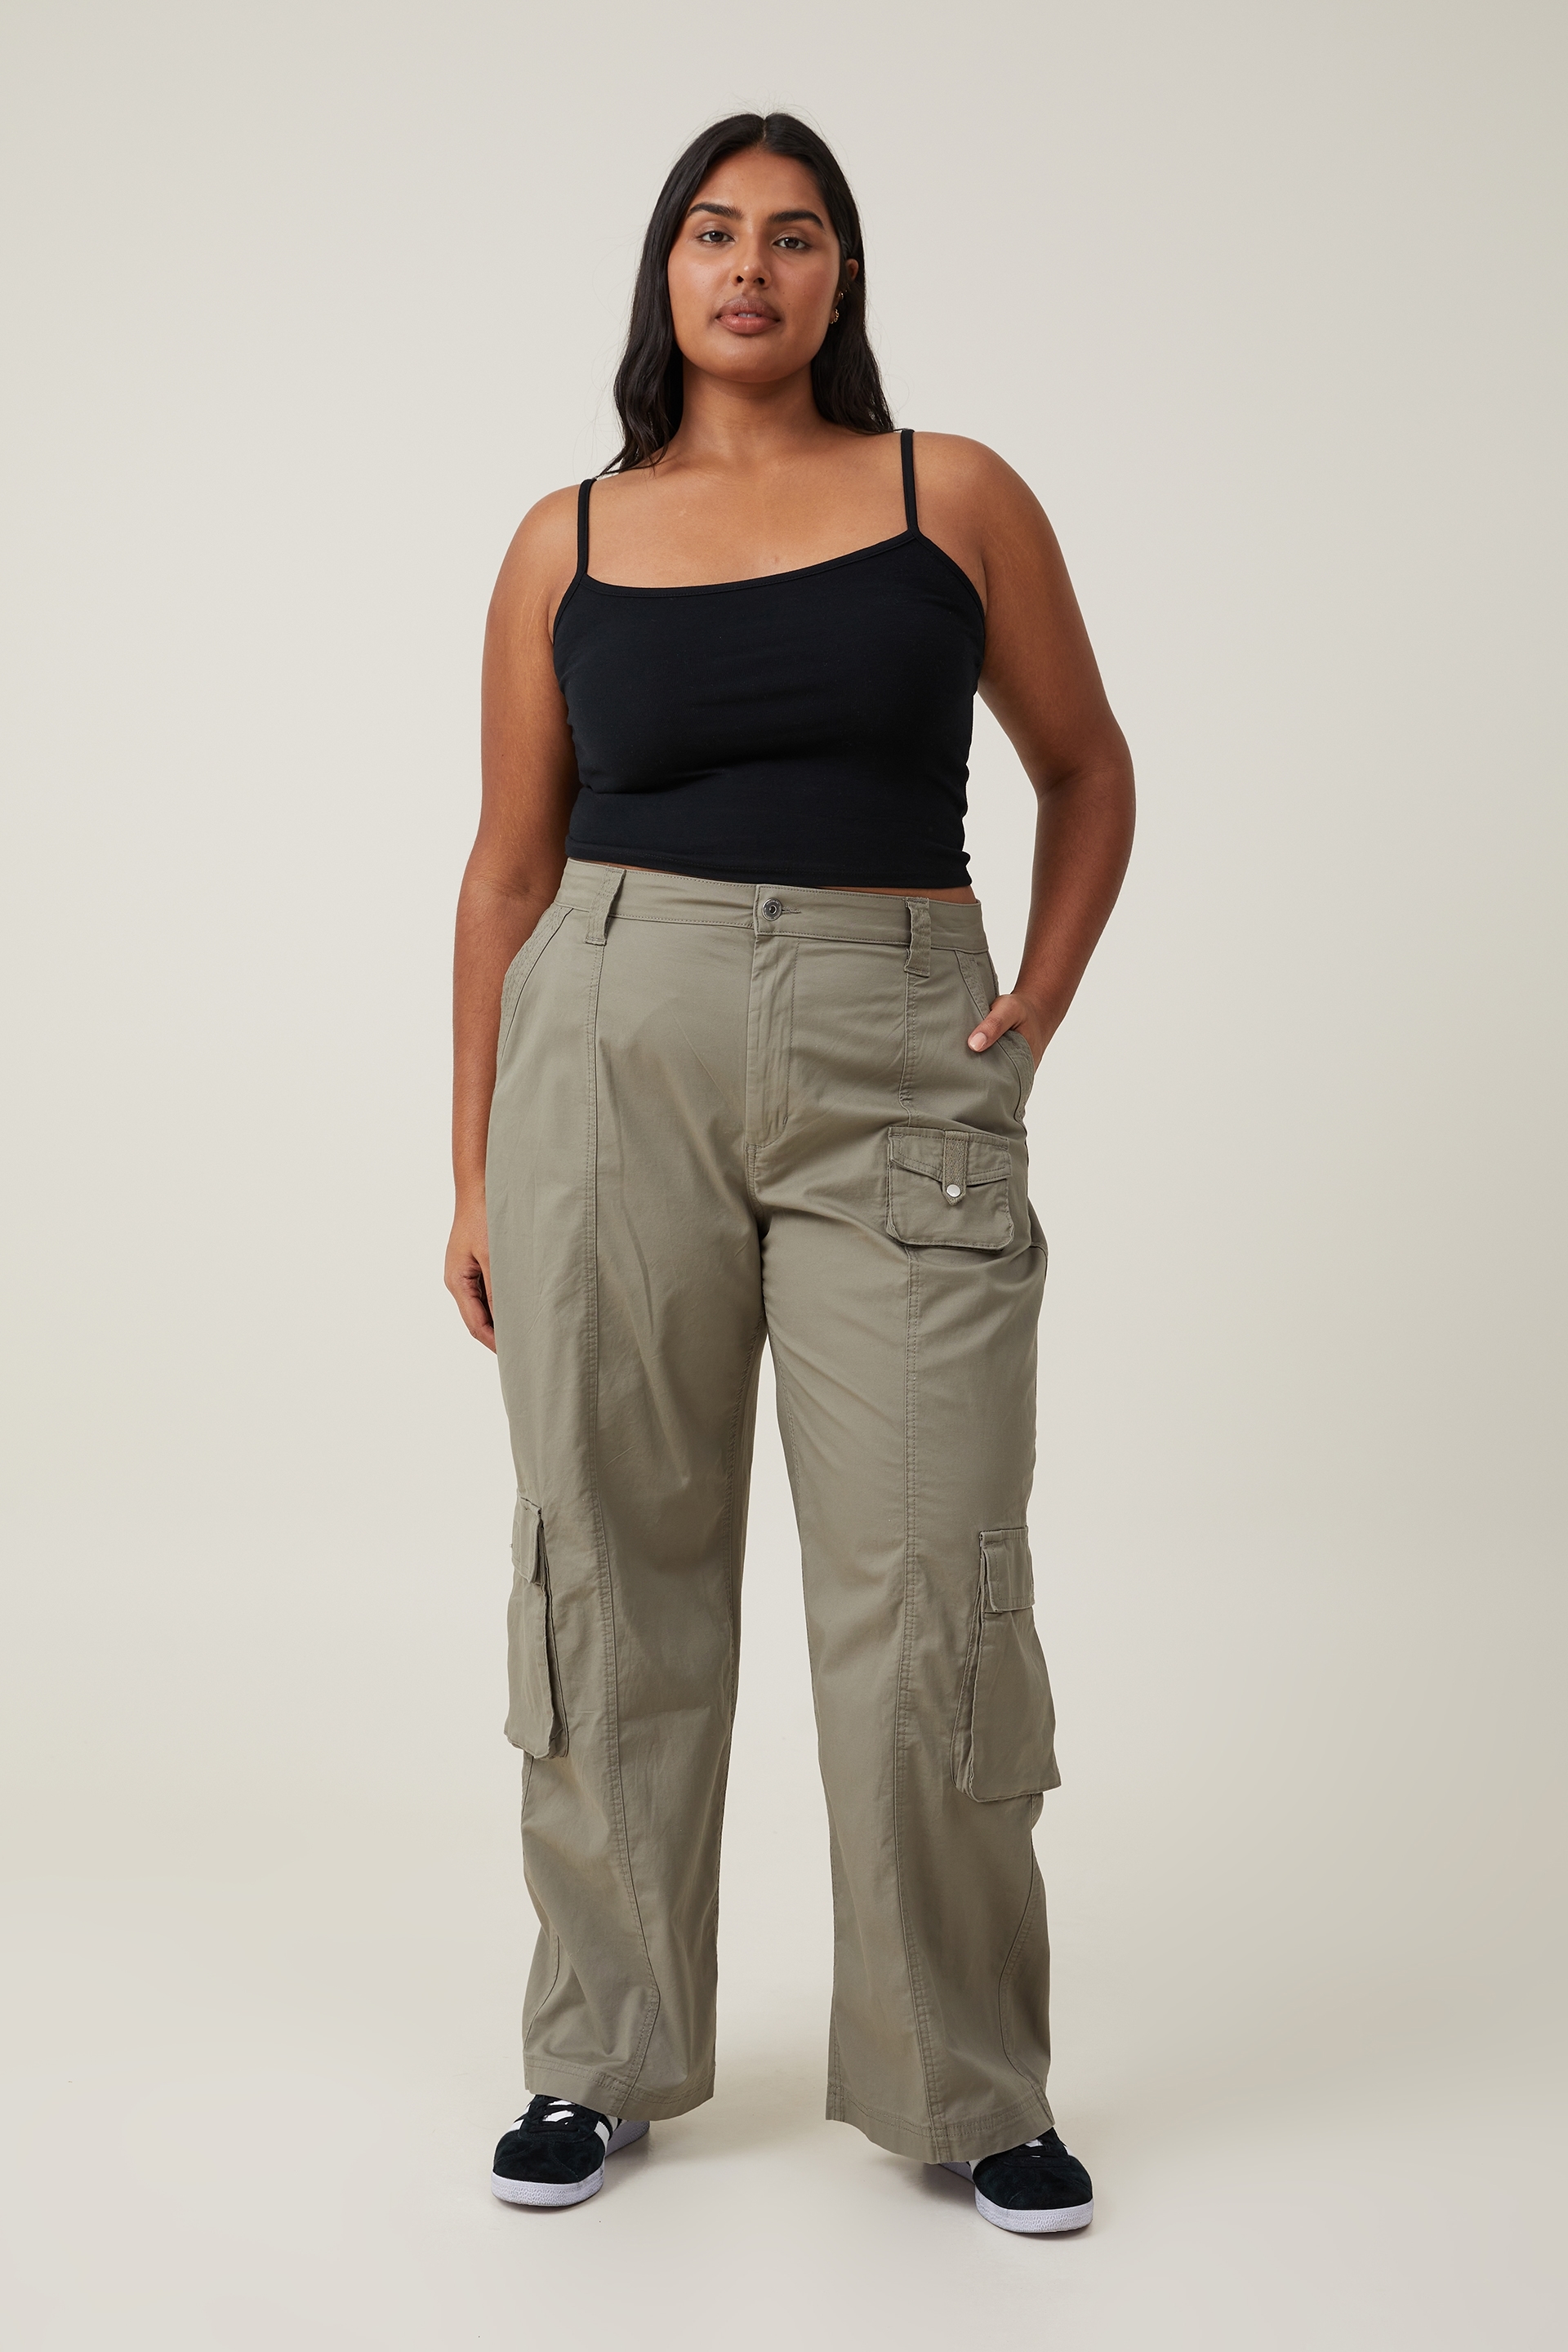 FAIWAD Elastic Waist Cargo Pants for Women High Waisted Baggy Straight  Lightweight Pants with Pockets (Medium, Black2) 